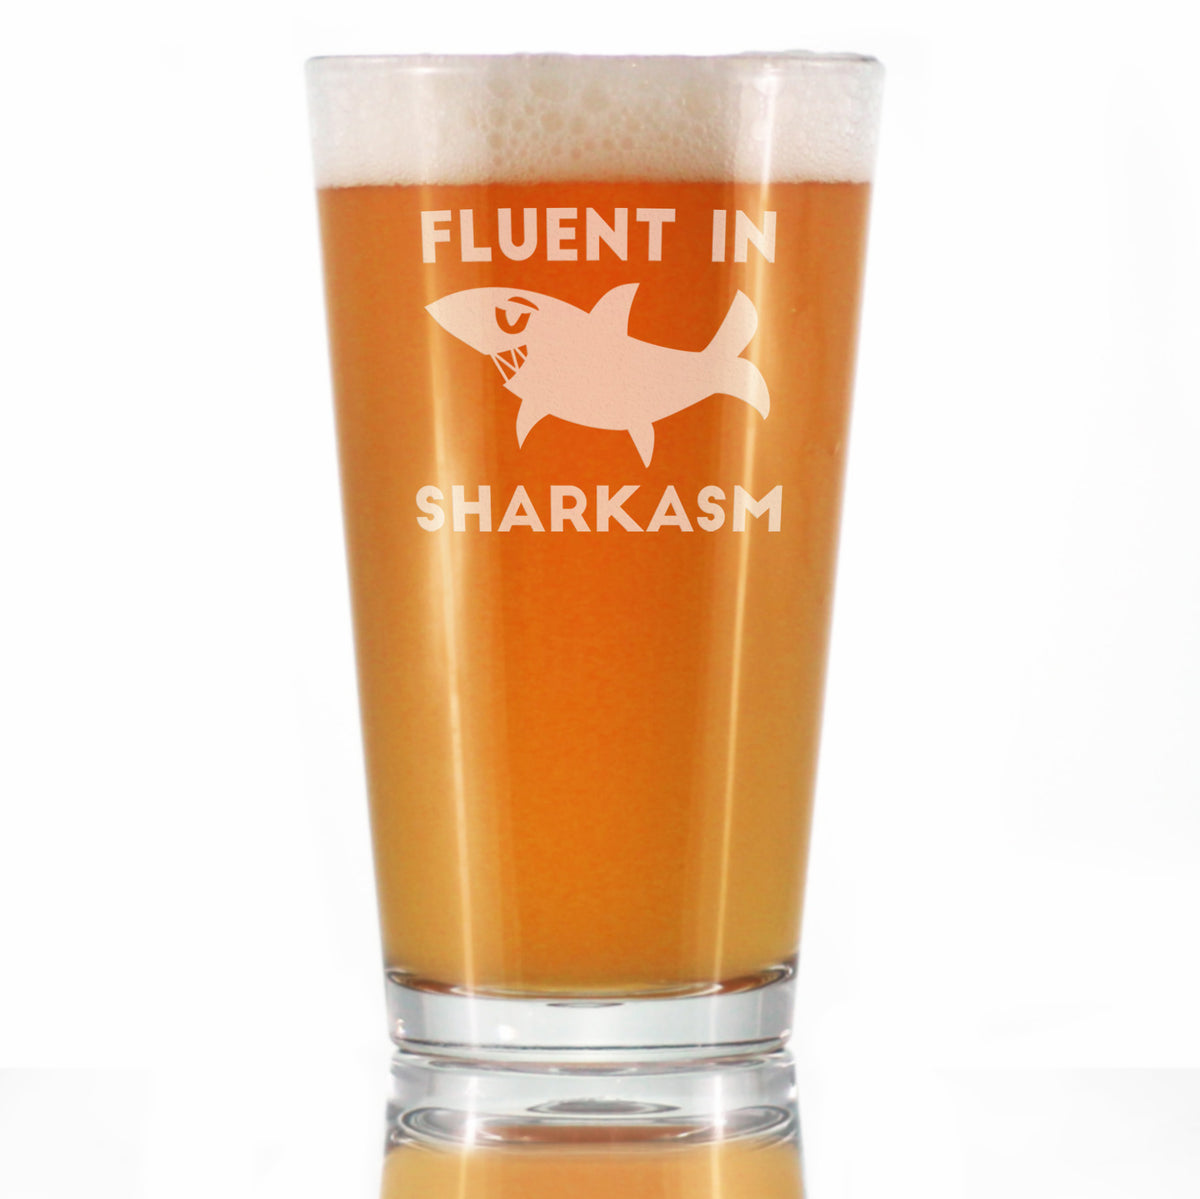 Fluent in Sharkasm - Funny Shark Pint Glass Gifts for Beer Drinking Men &amp; Women - Fun Unique Sharks Decor